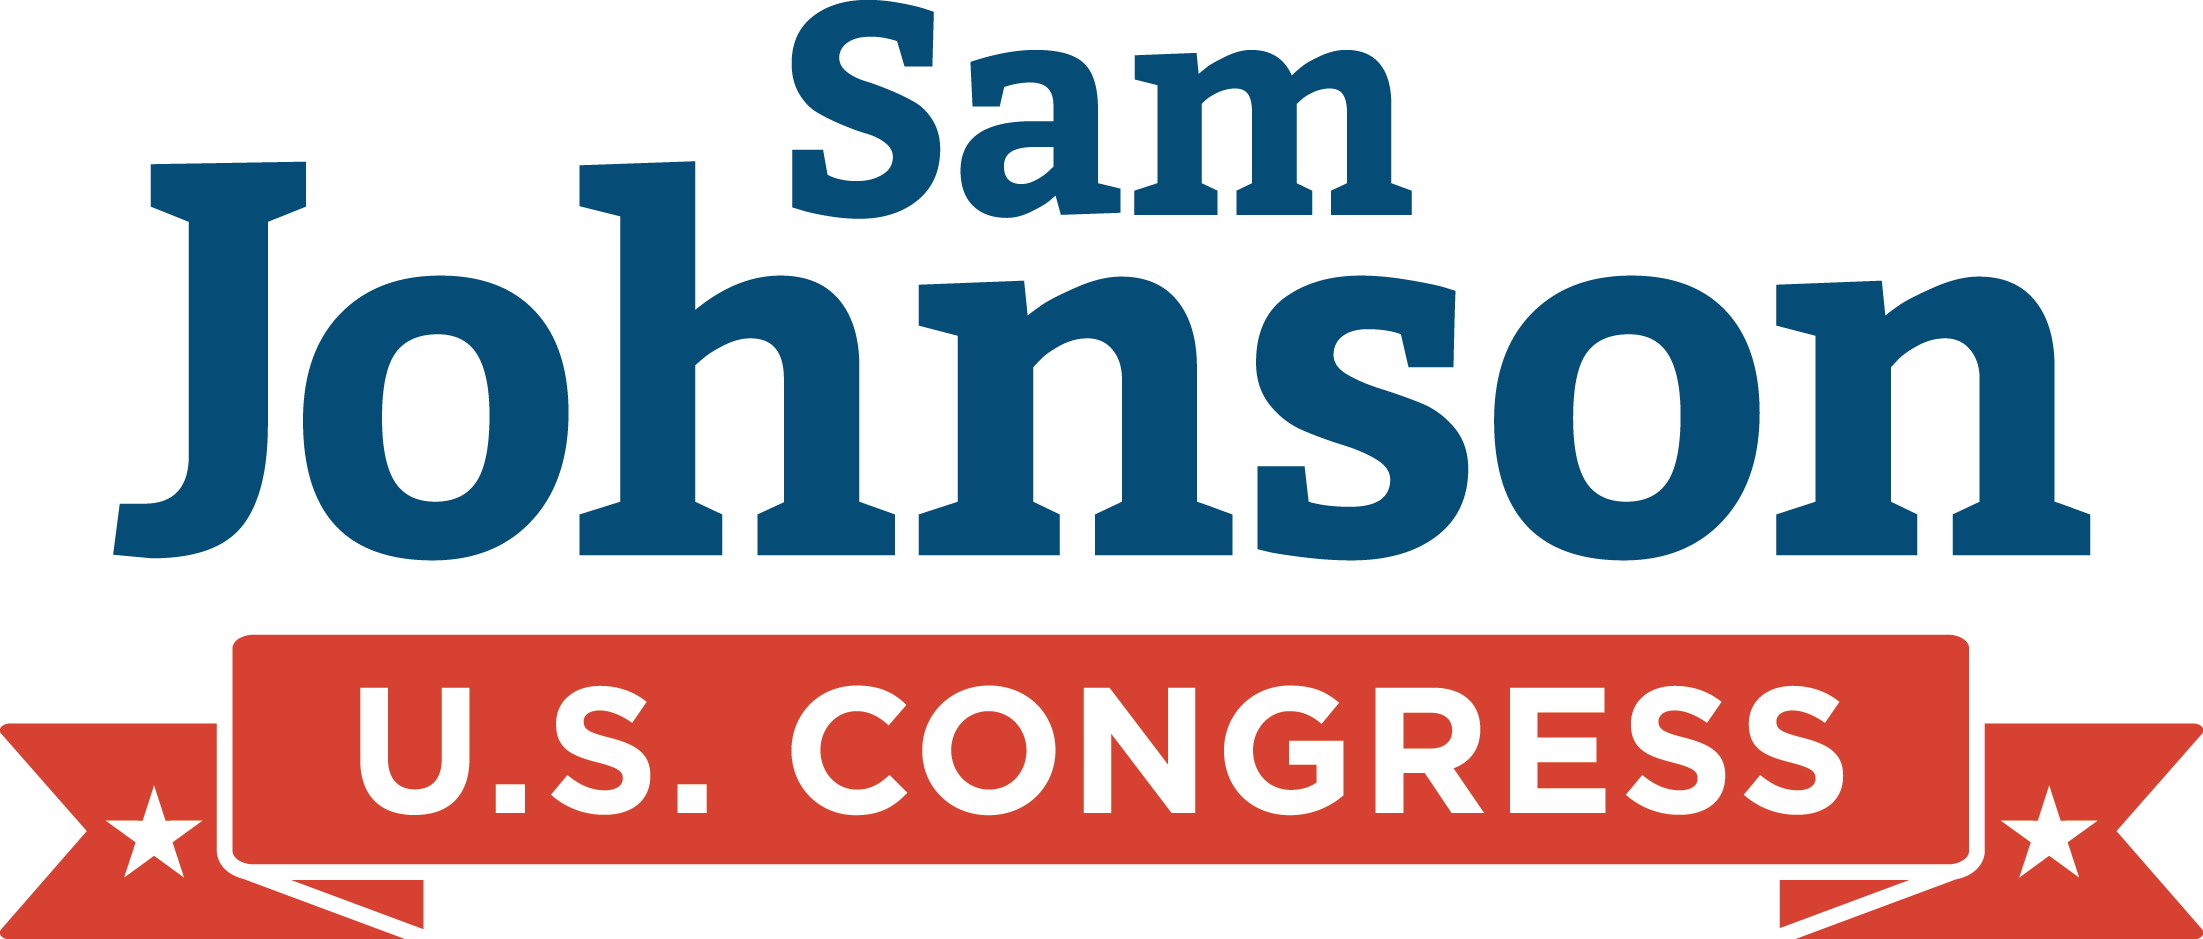 Sam Johnson new logo